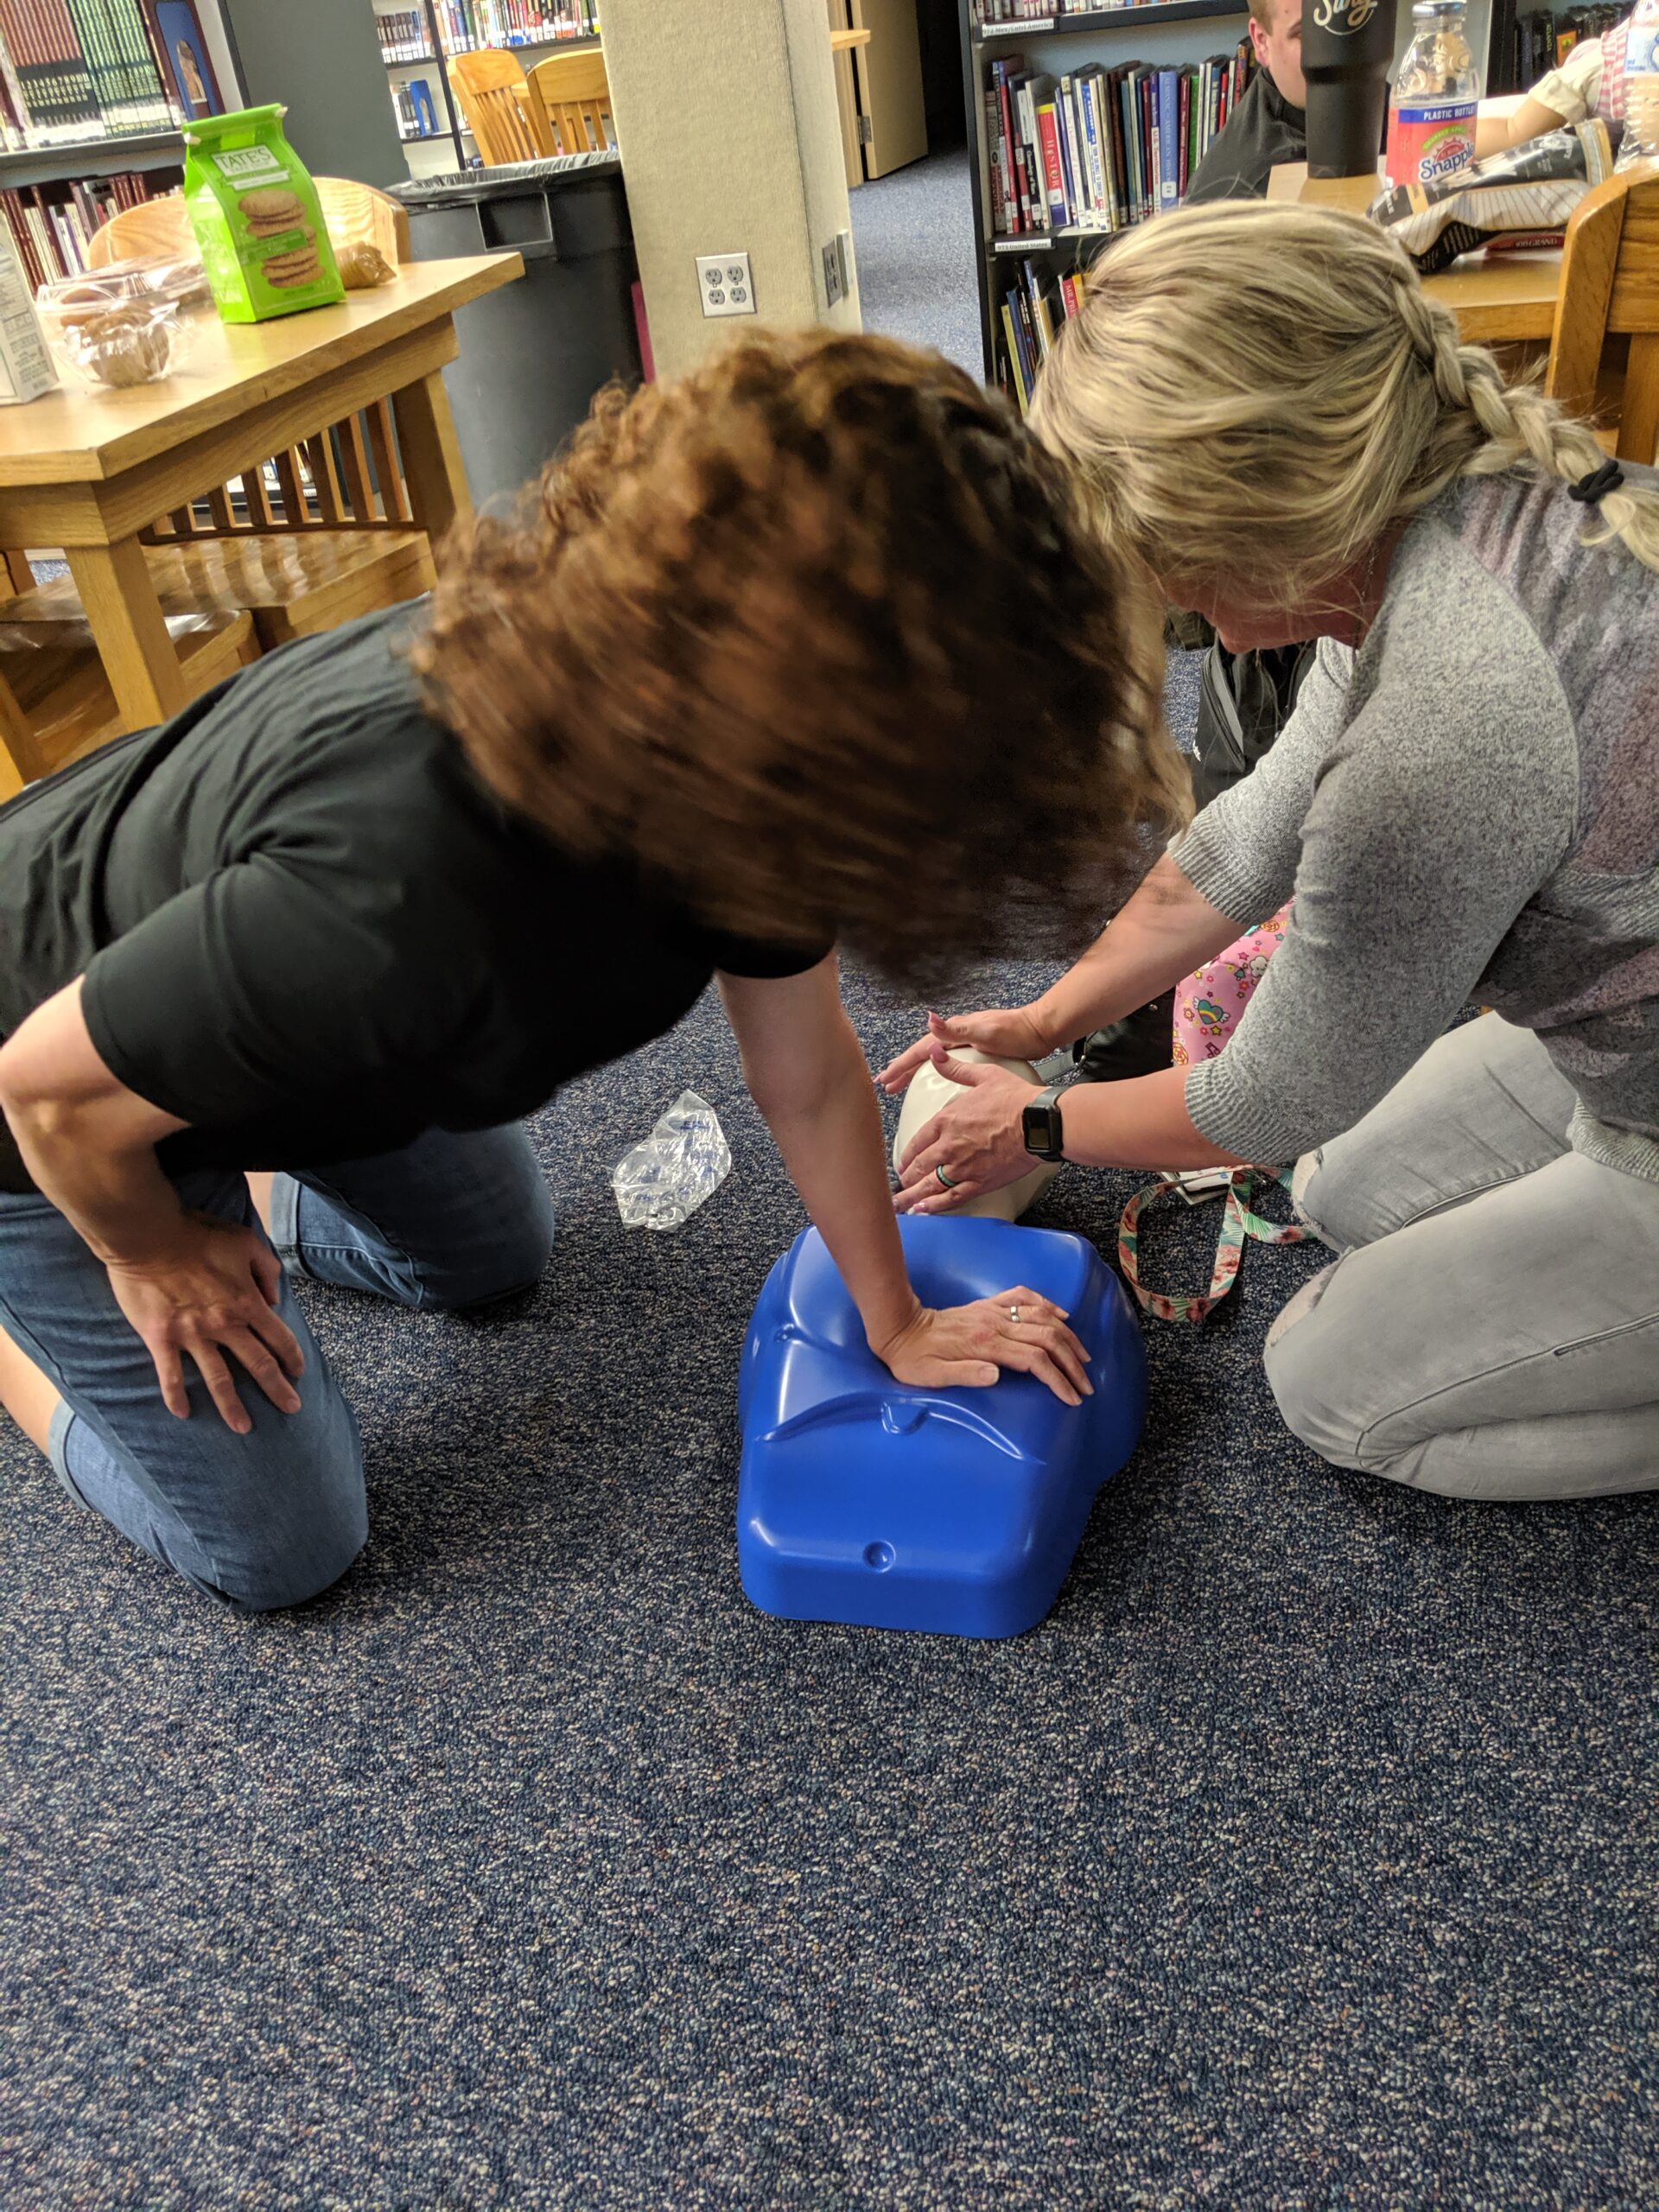 Teachers performing CPR on a manikin